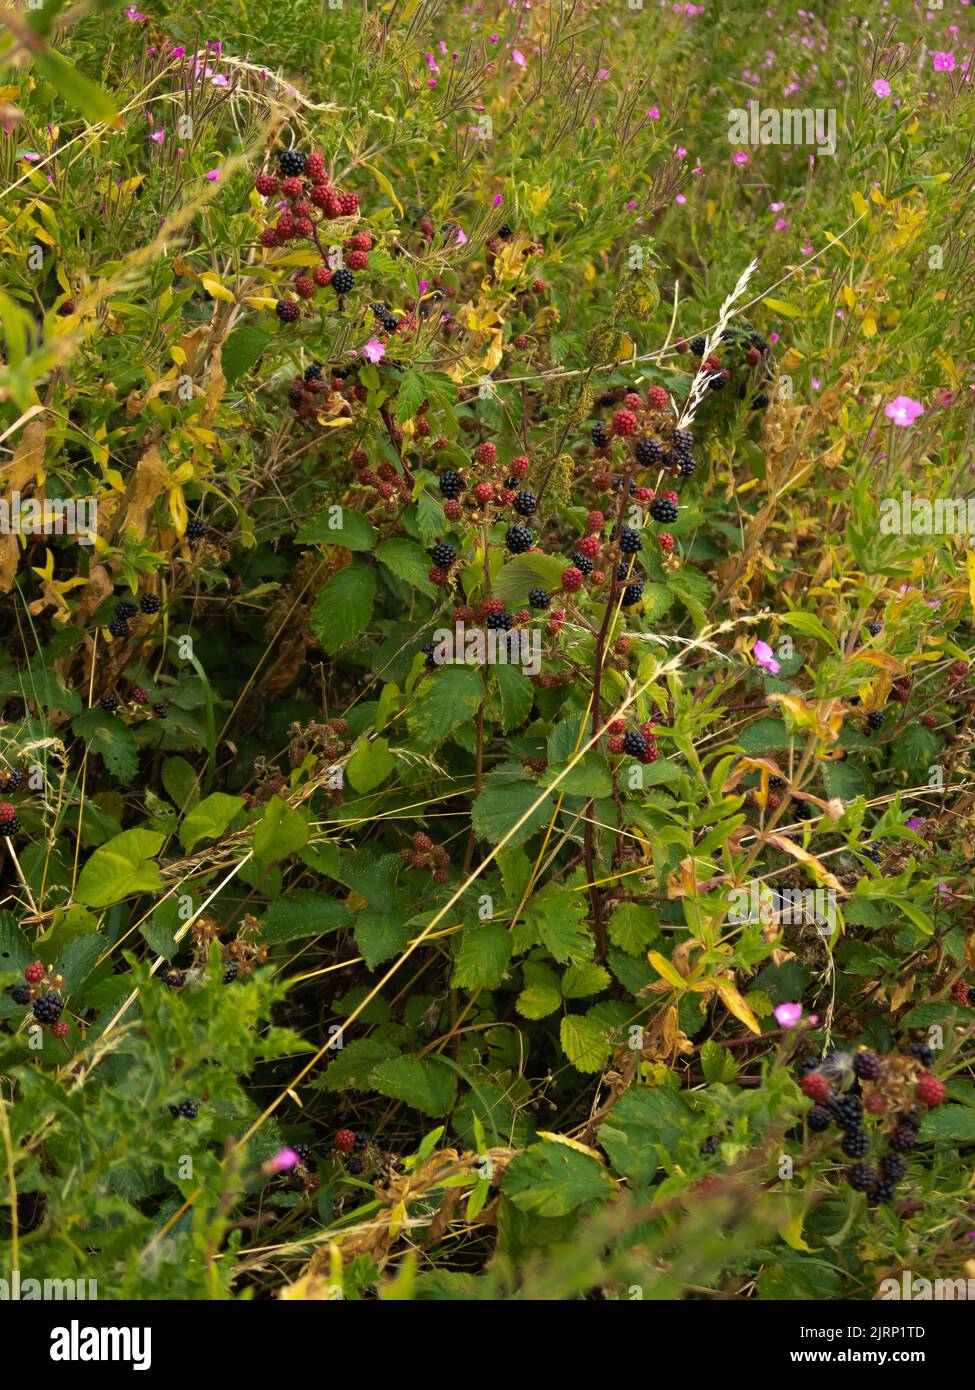 Blackberries, blackberry, wild, hedgerows, hardy brambles, plump little fruits, meadows, wild areas, vegetation, wild flowers, meadow flowers, natural Stock Photo